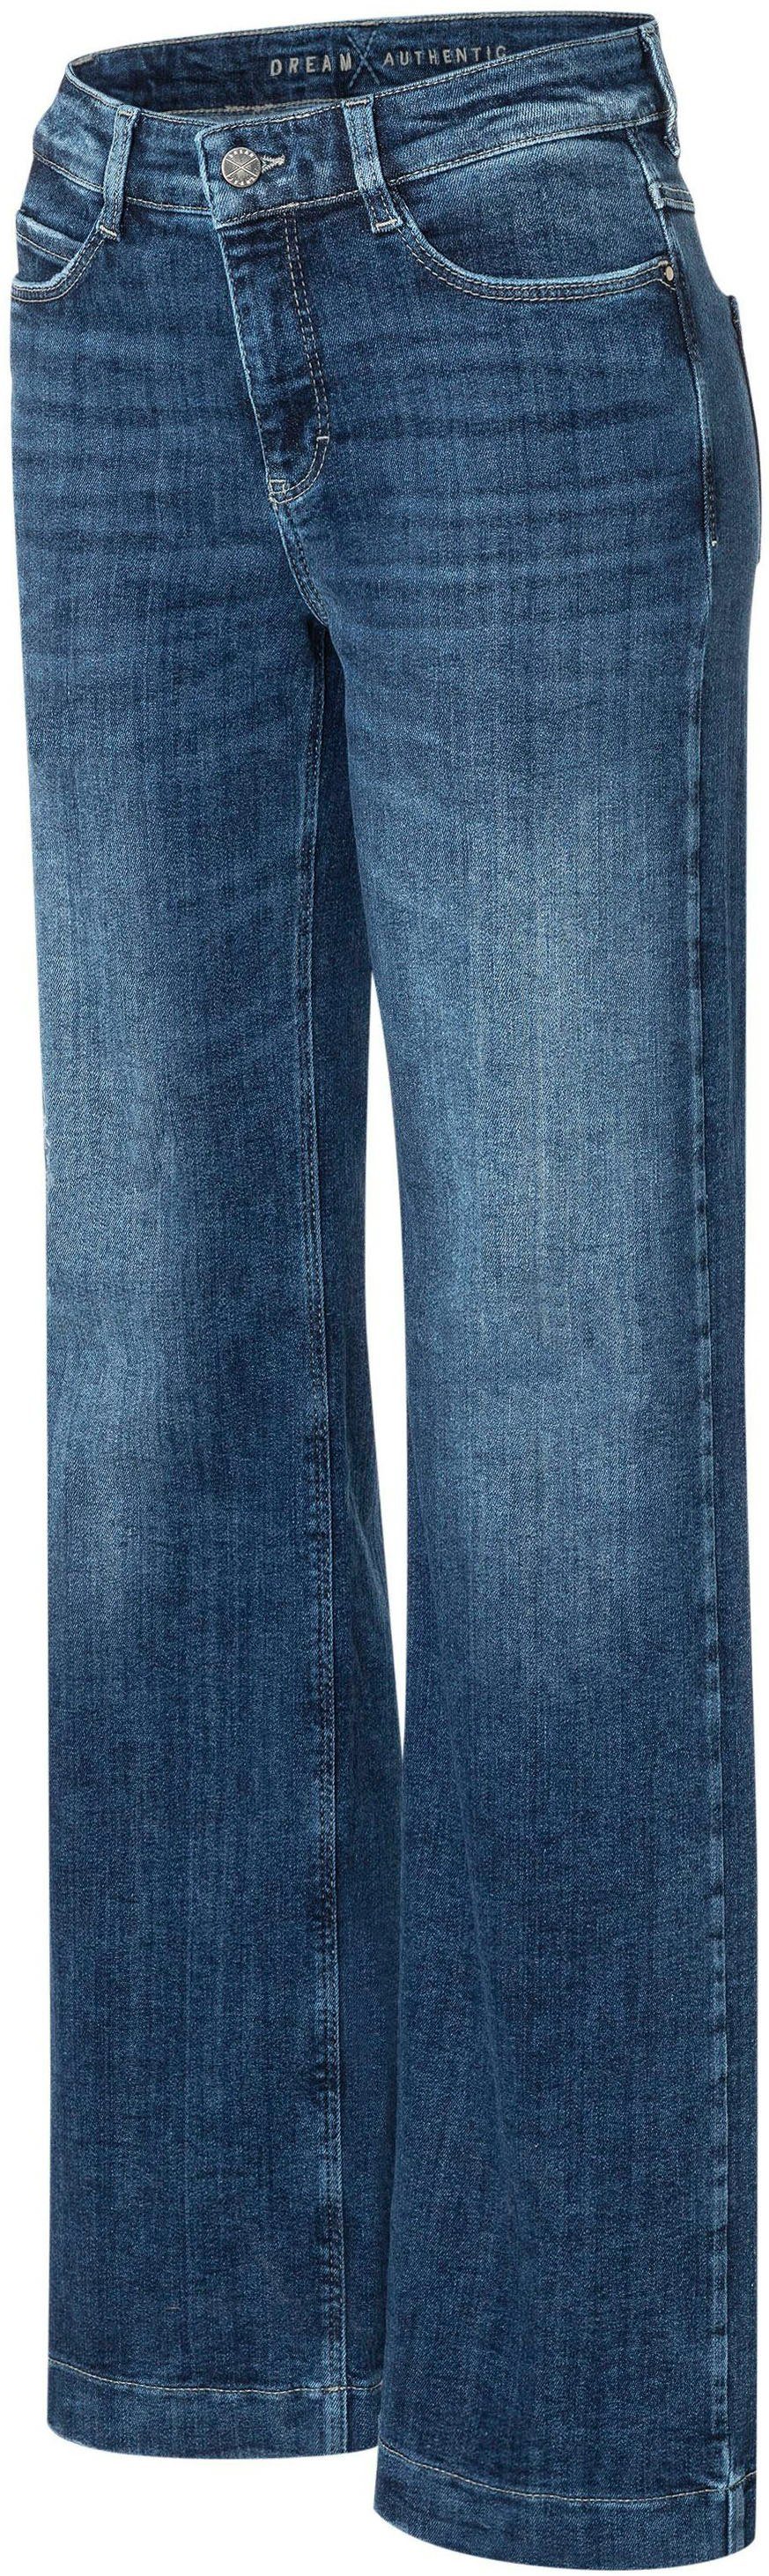 MAC Weite Jeans Dream Wide mit authentic formendem authentic wash Shaping-Effekt cobalt